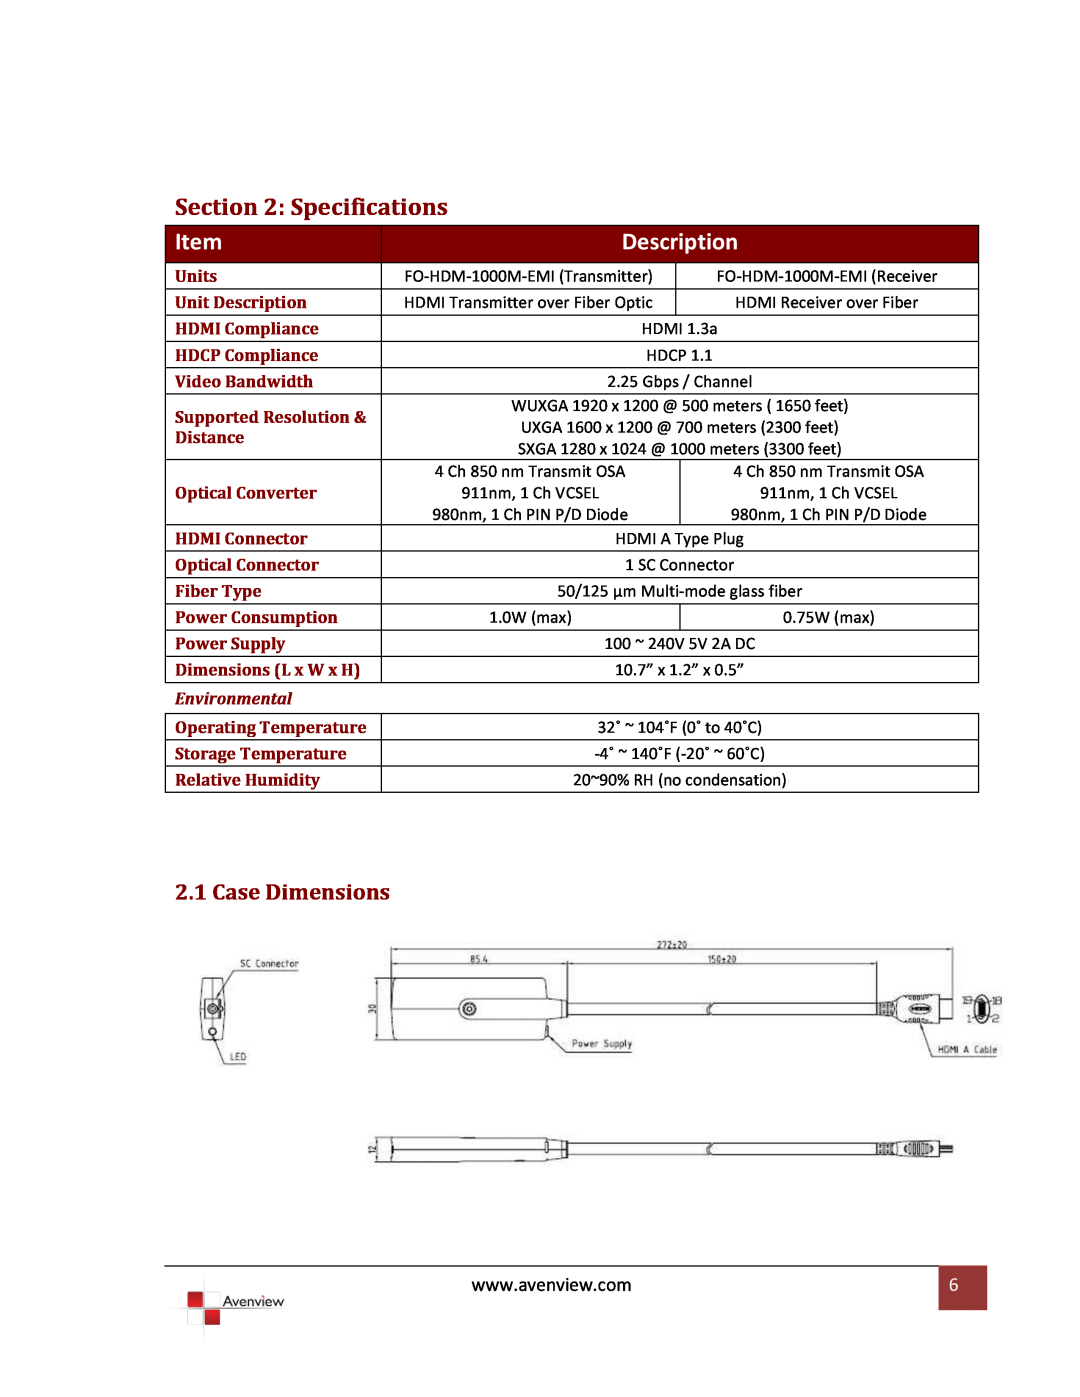 Avenview FO-HDM-1000M-EMI specifications Specifications, Case Dimensions, Description, Environmental 